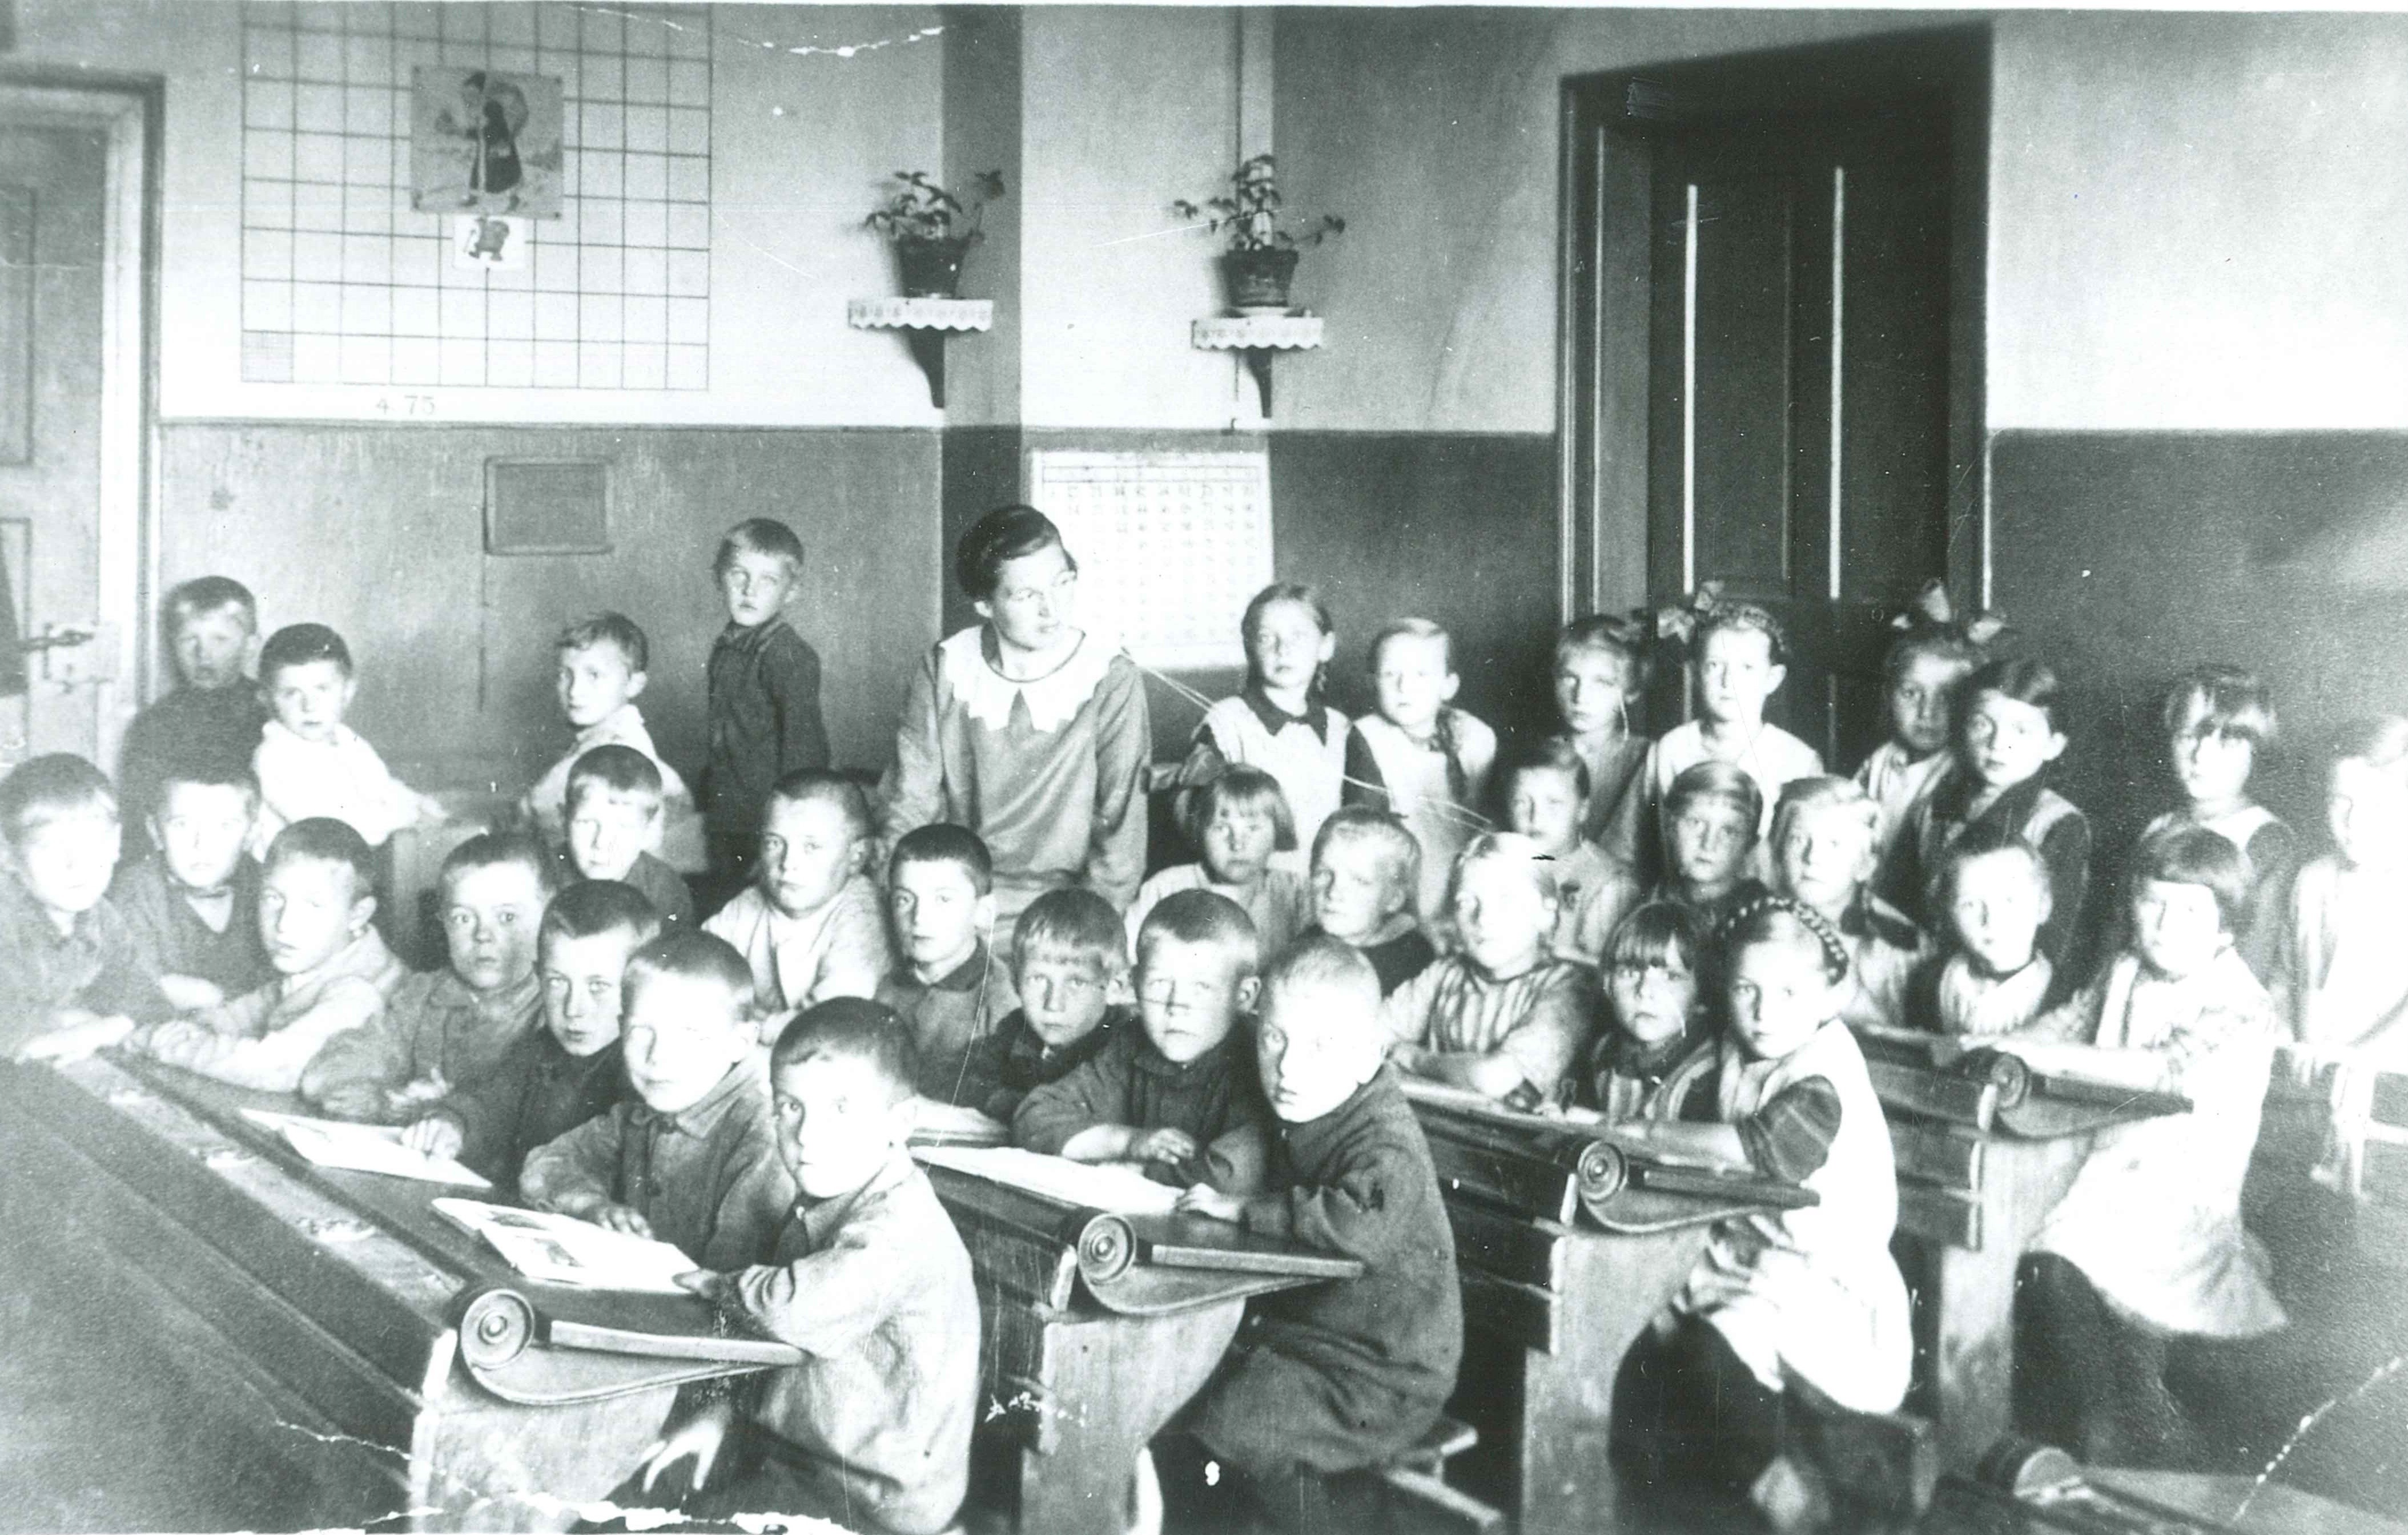 Klassenzimmer, Katholische Schule "Schönblick", Bendorf-Stromberg, 1934 (REM CC BY-NC-SA)